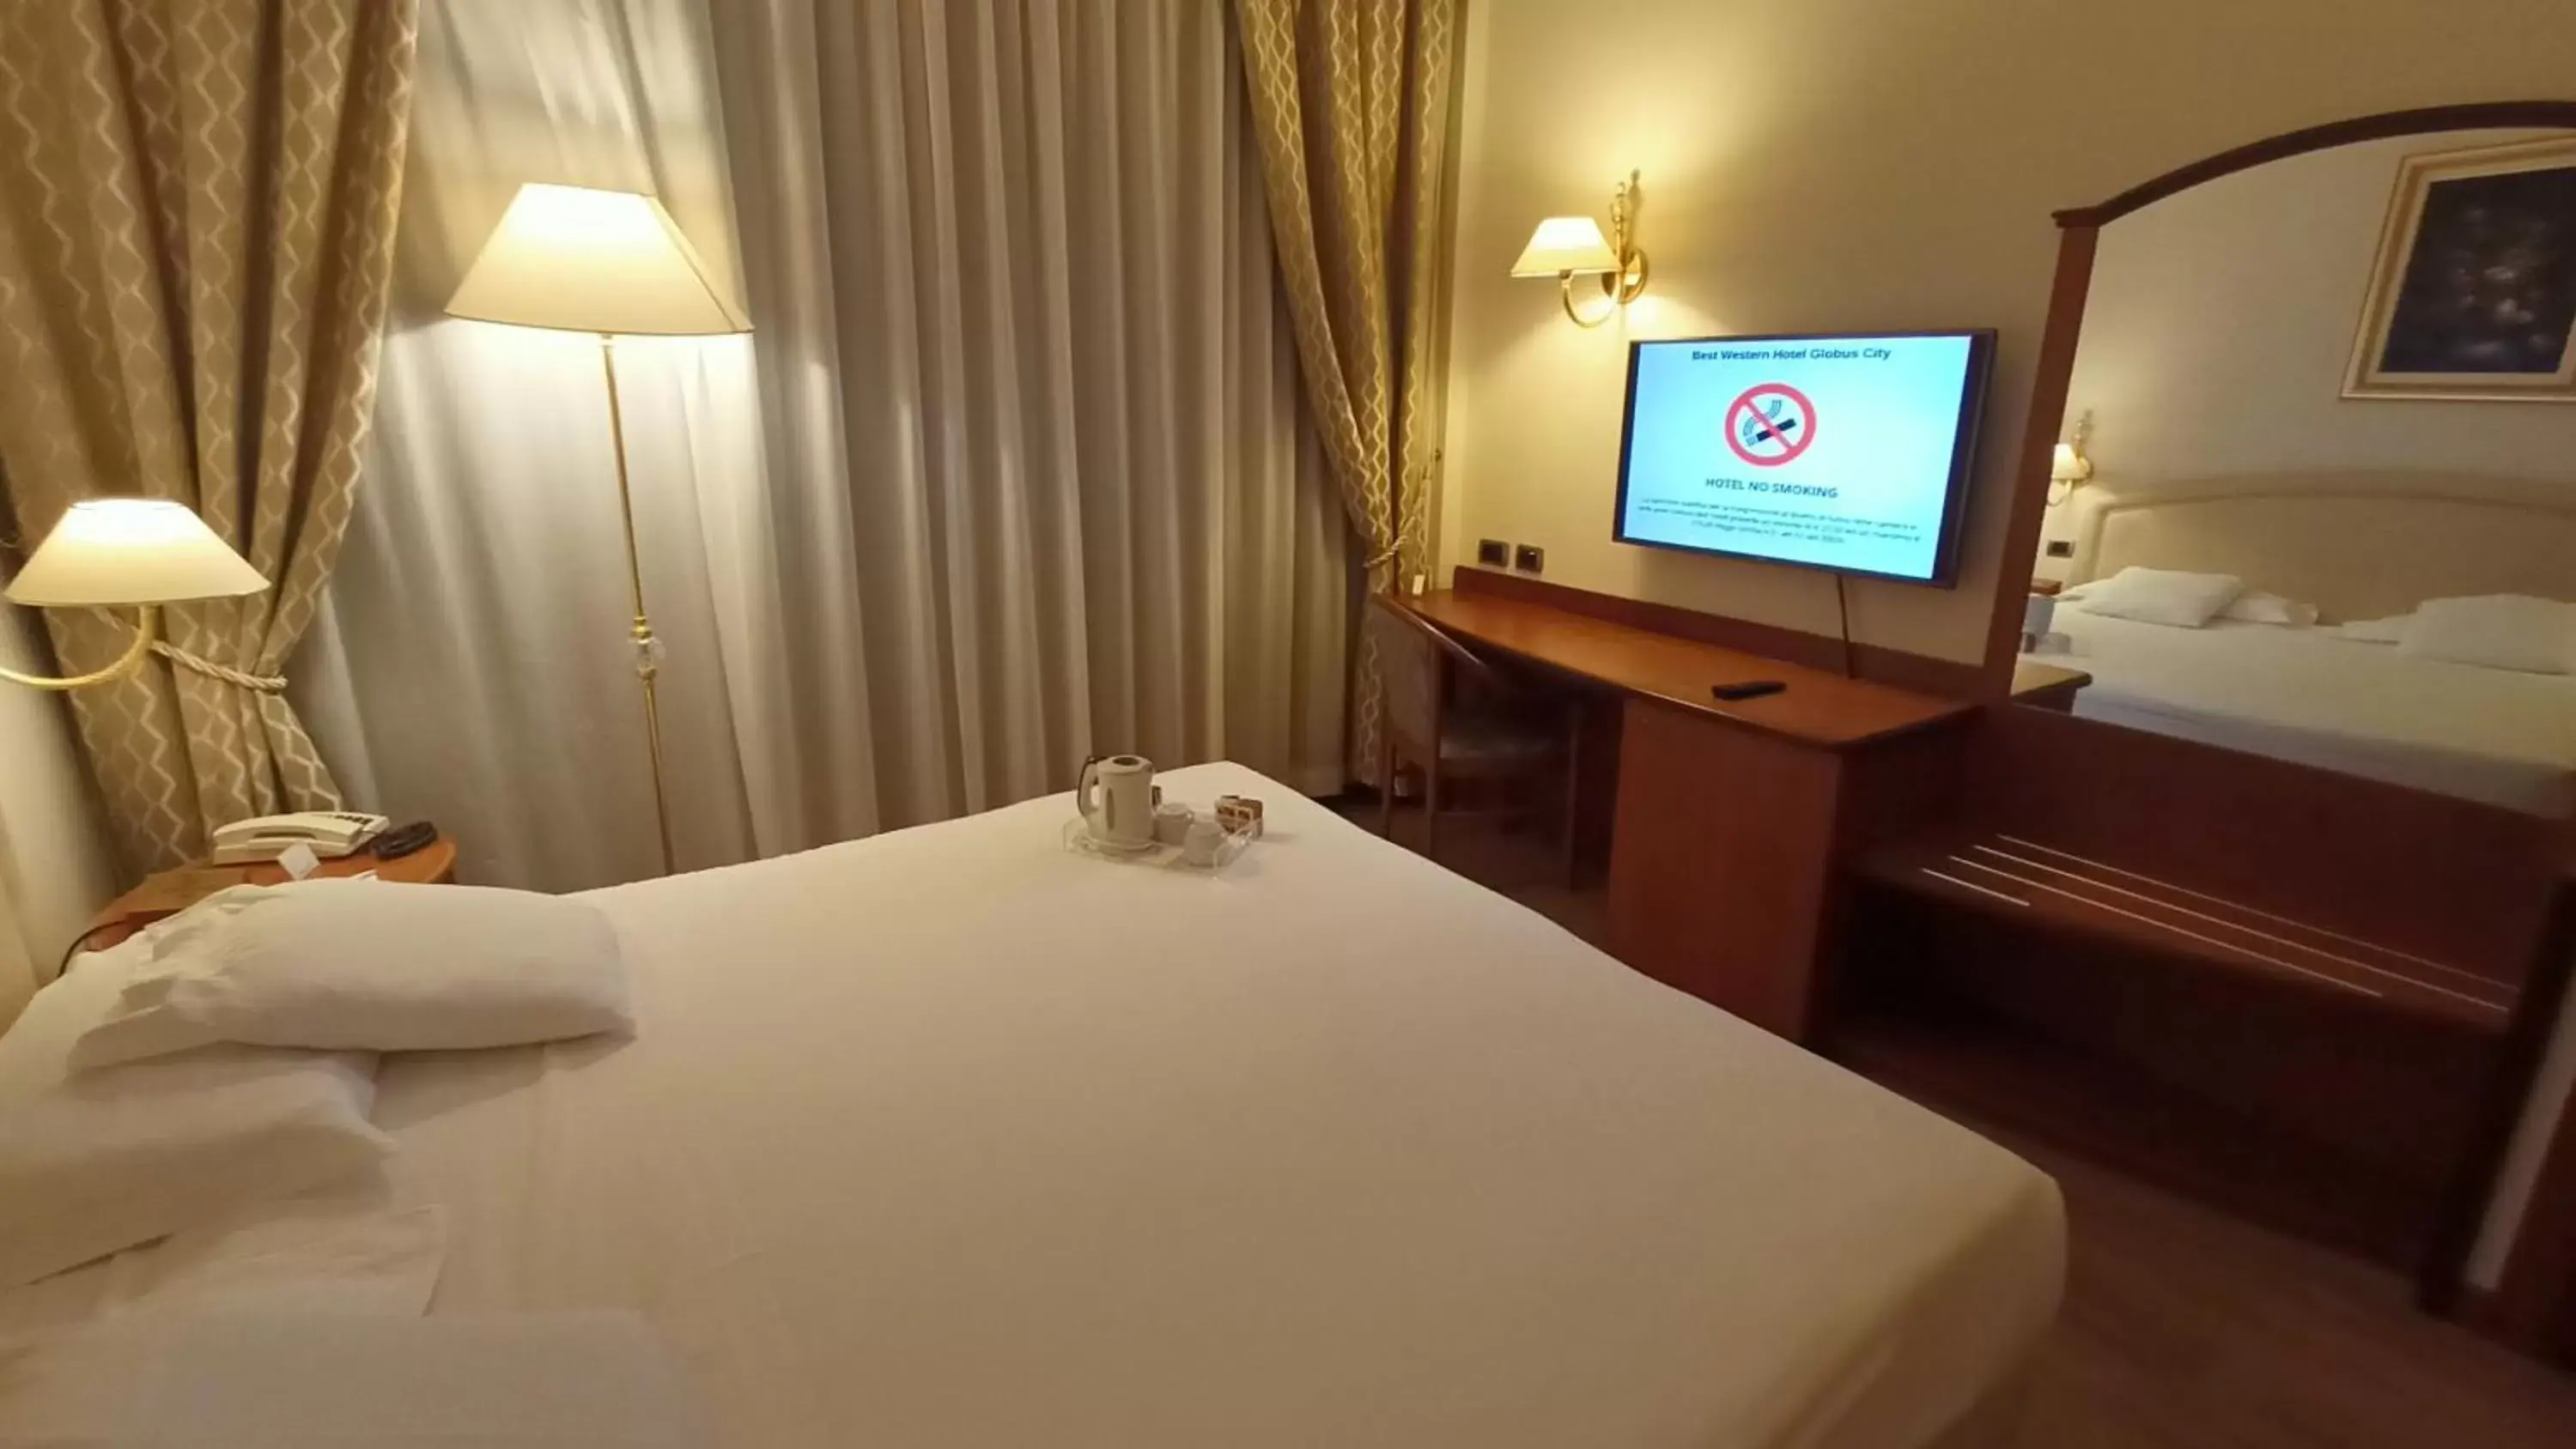 Bedroom, Bed in Best Western Hotel Globus City